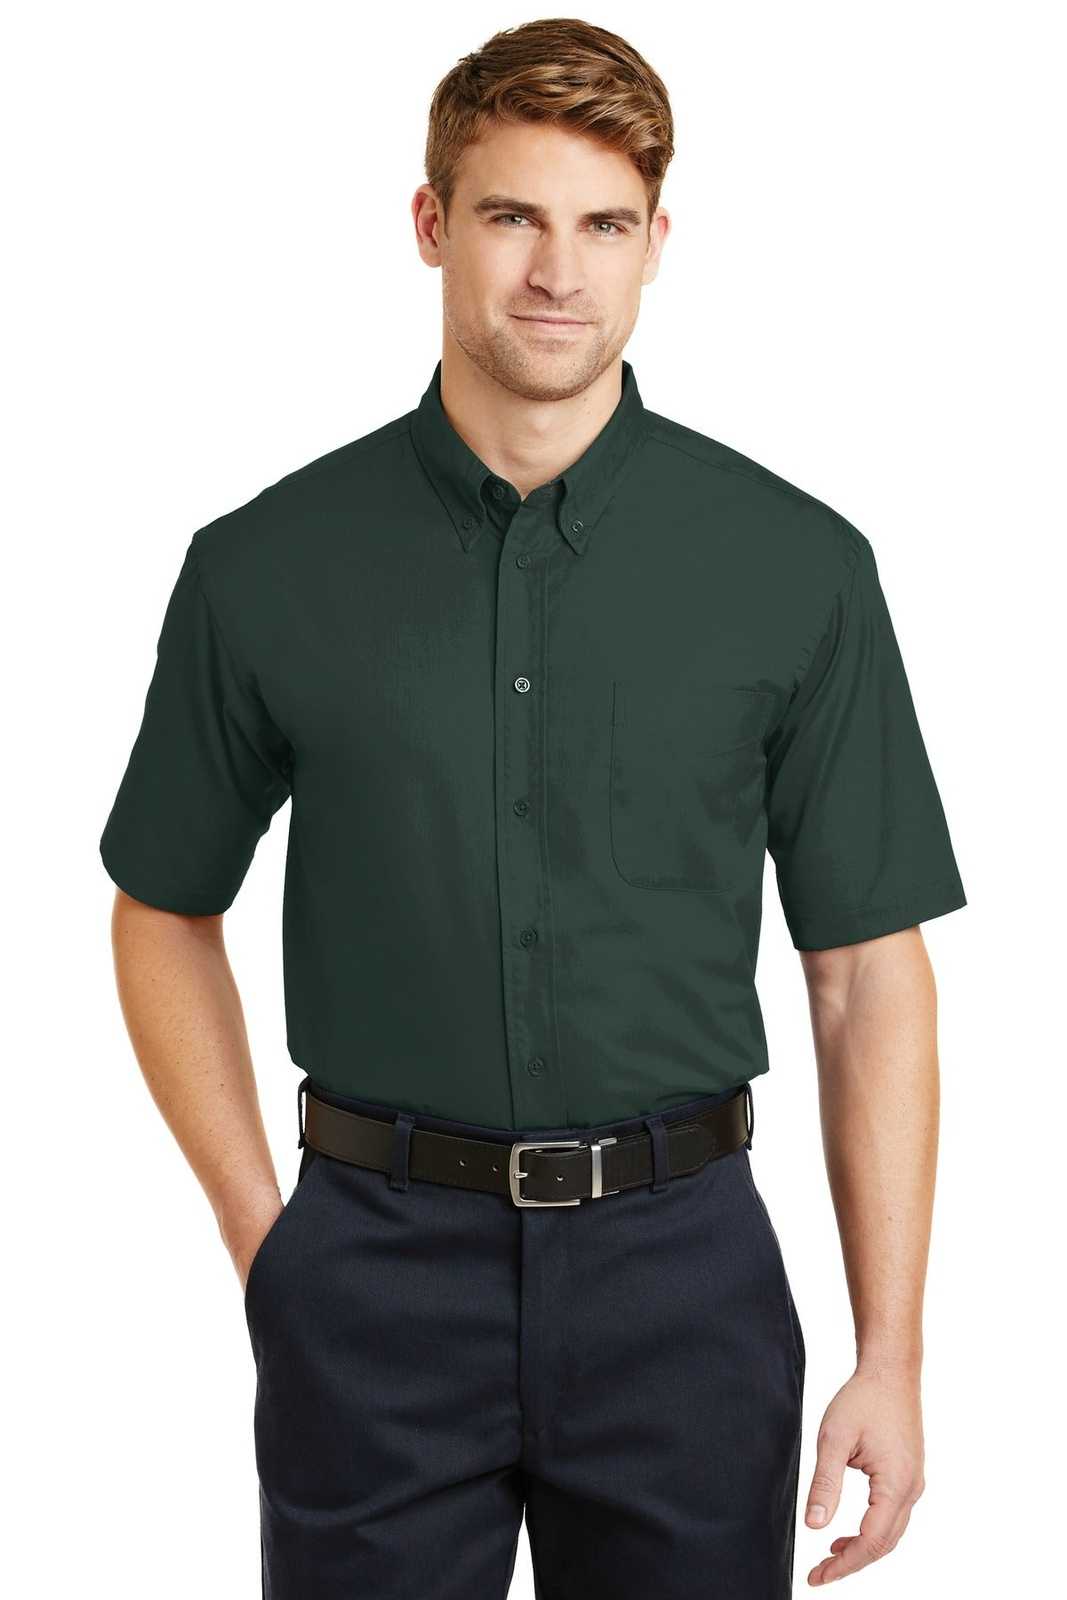 CornerStone SP18 Short Sleeve Superpro Twill Shirt - Dark Green - HIT a Double - 1